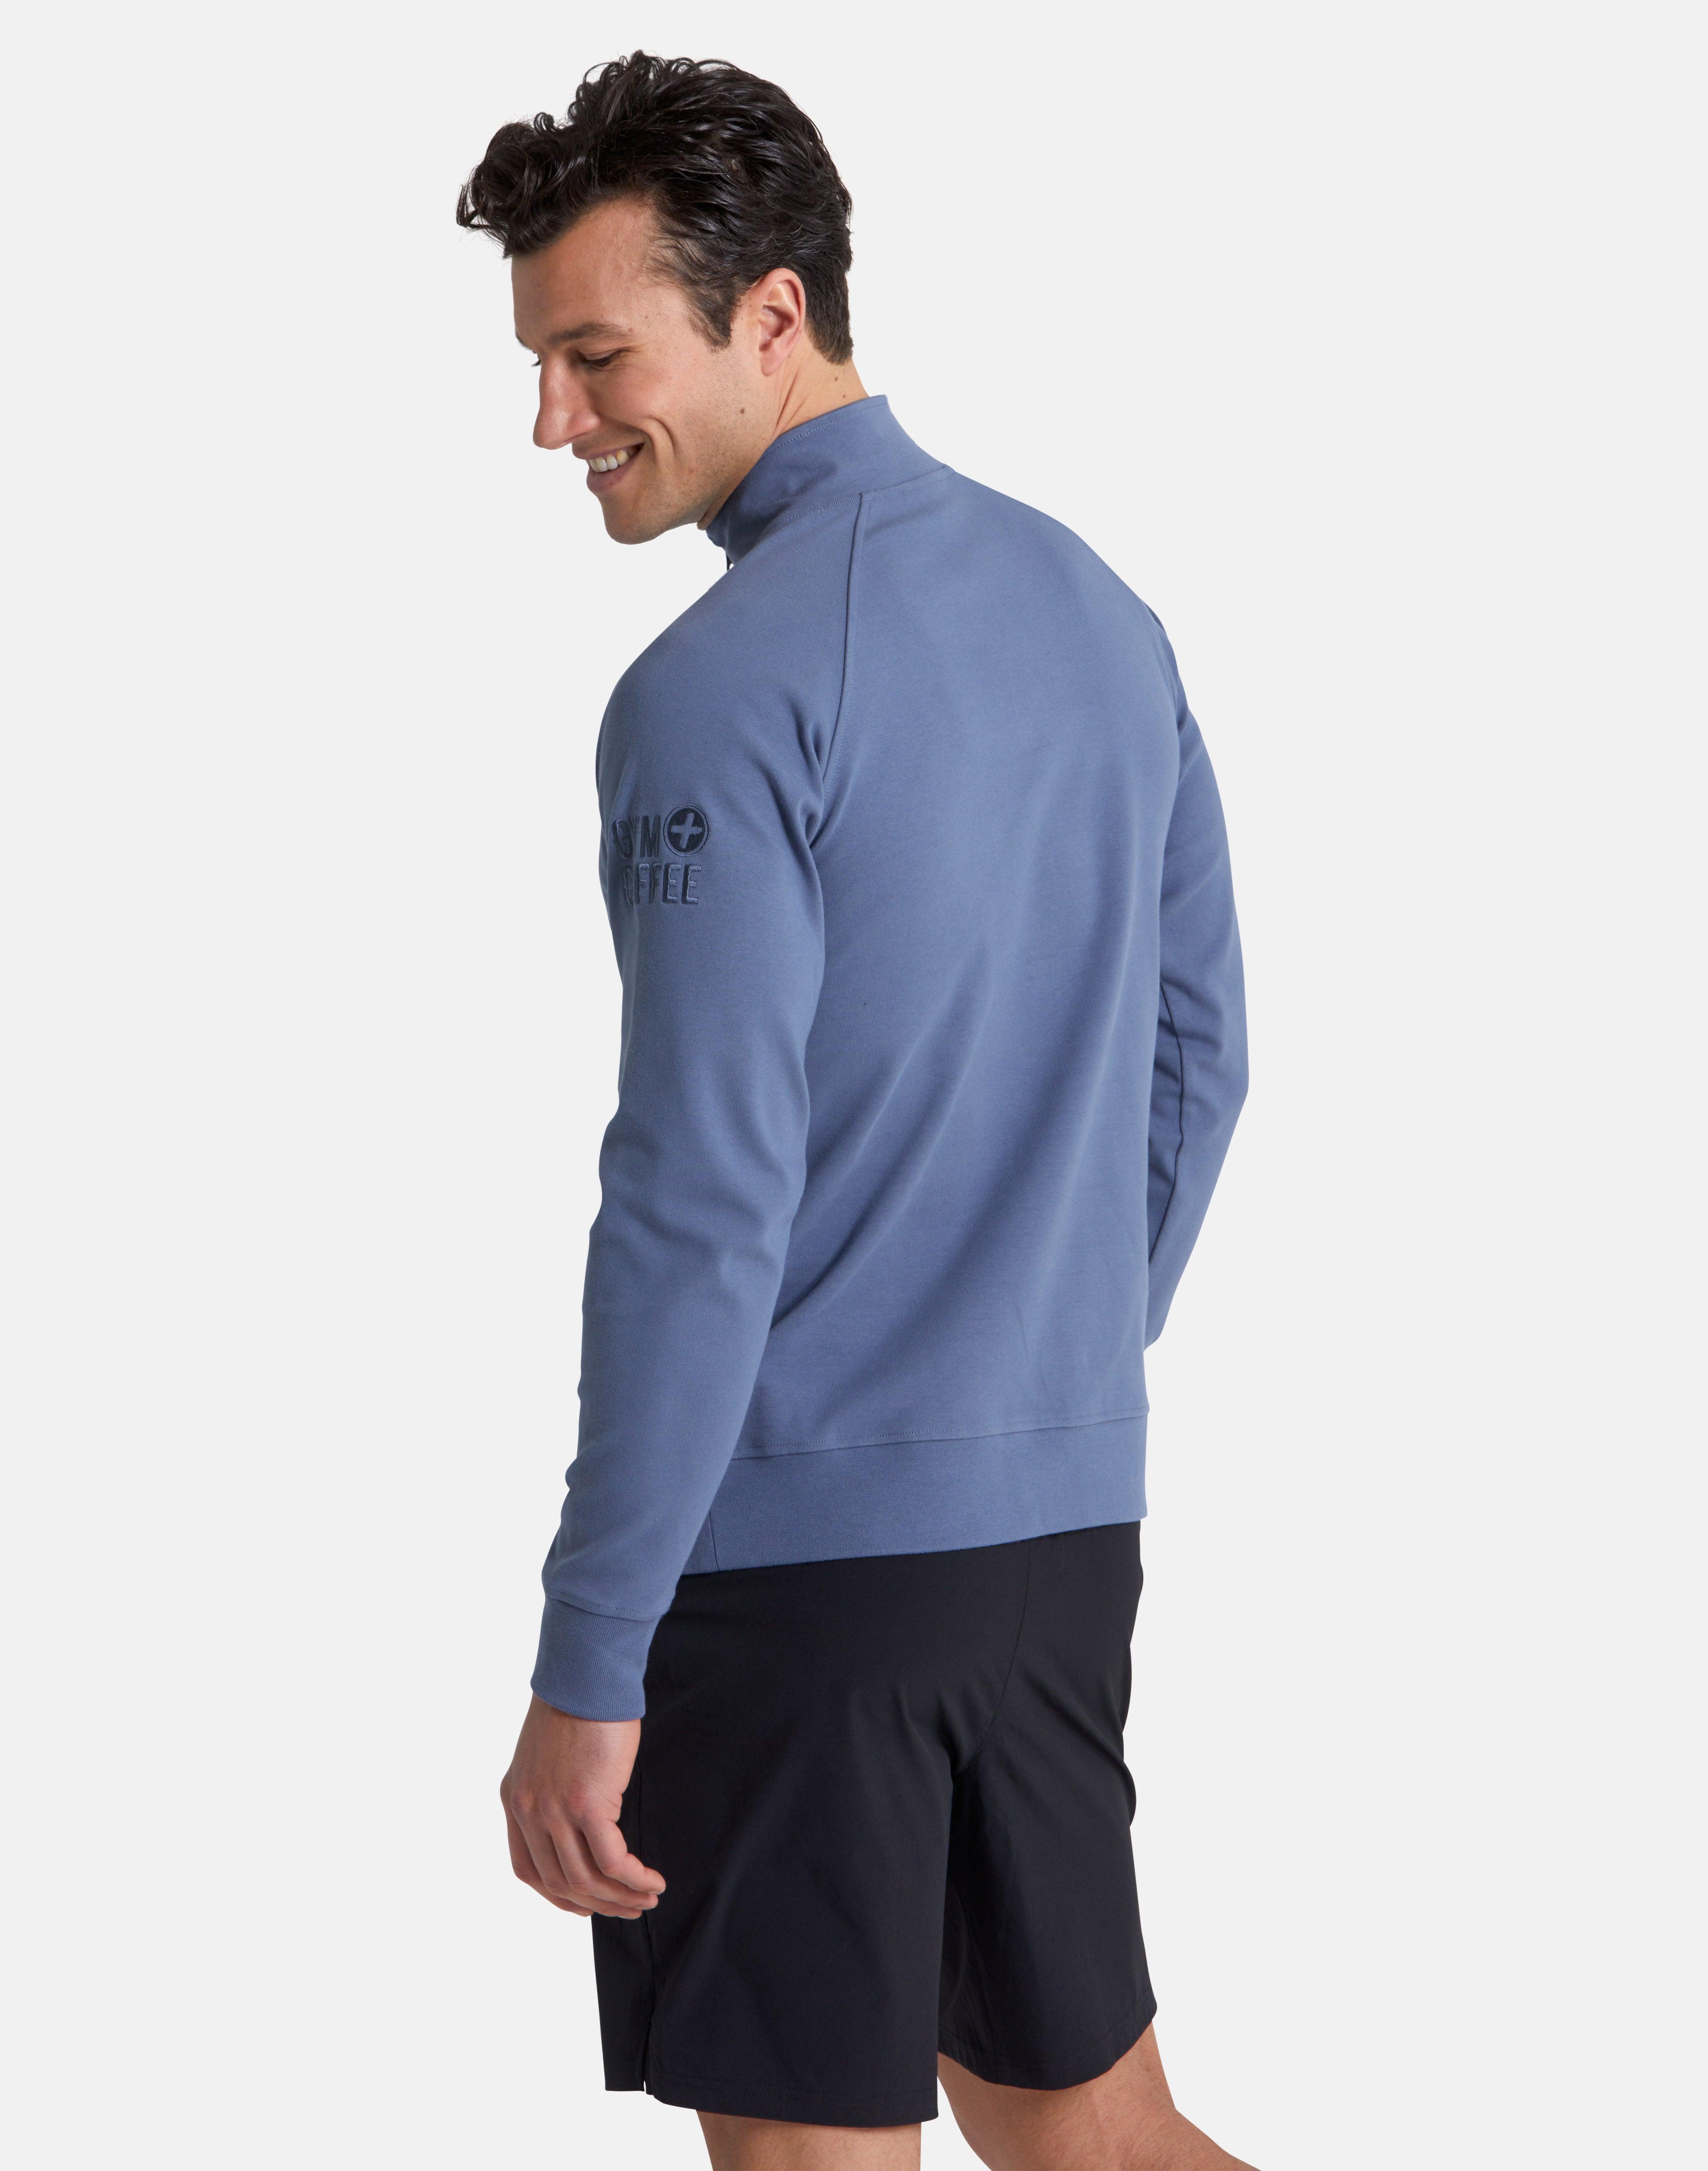 Essential Half Zip in Thunder Blue - Sweatshirts - Gym+Coffee